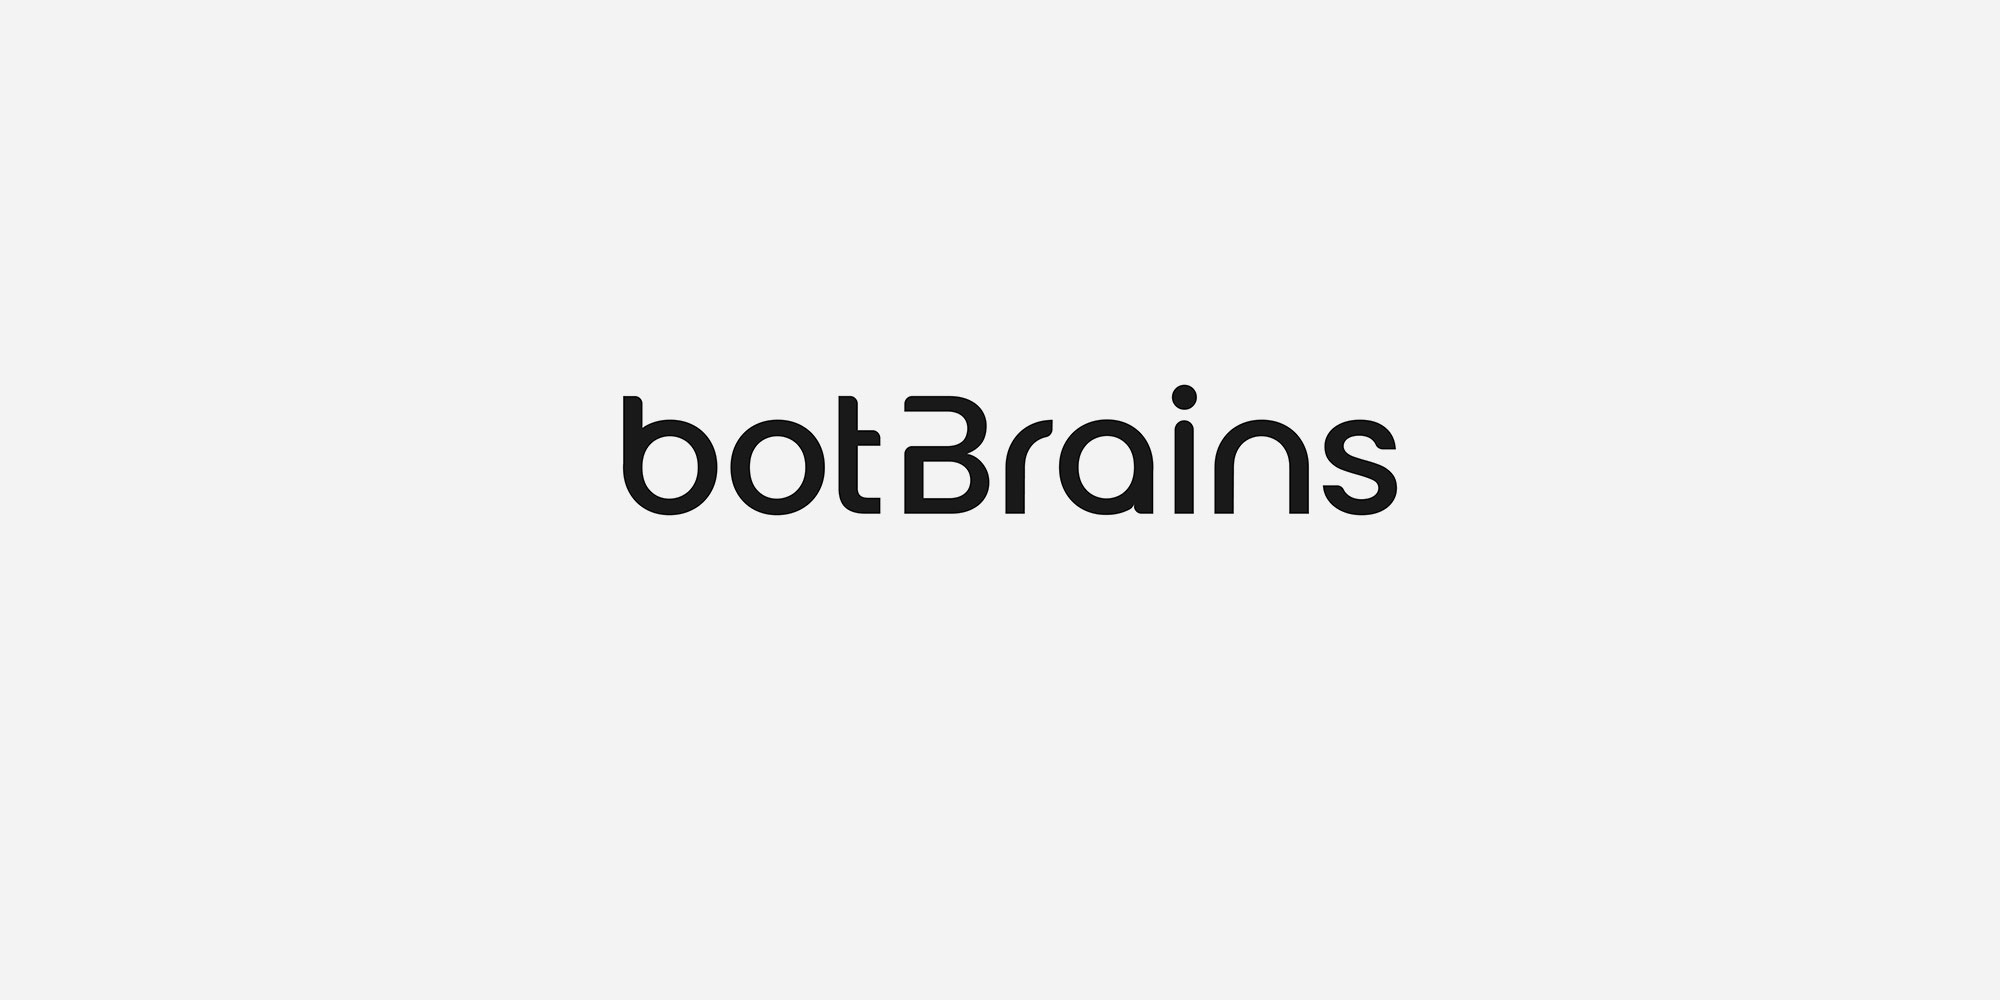 botBrains Logo Development by the freelance art director Christoph Gey from Leipzig, Germany